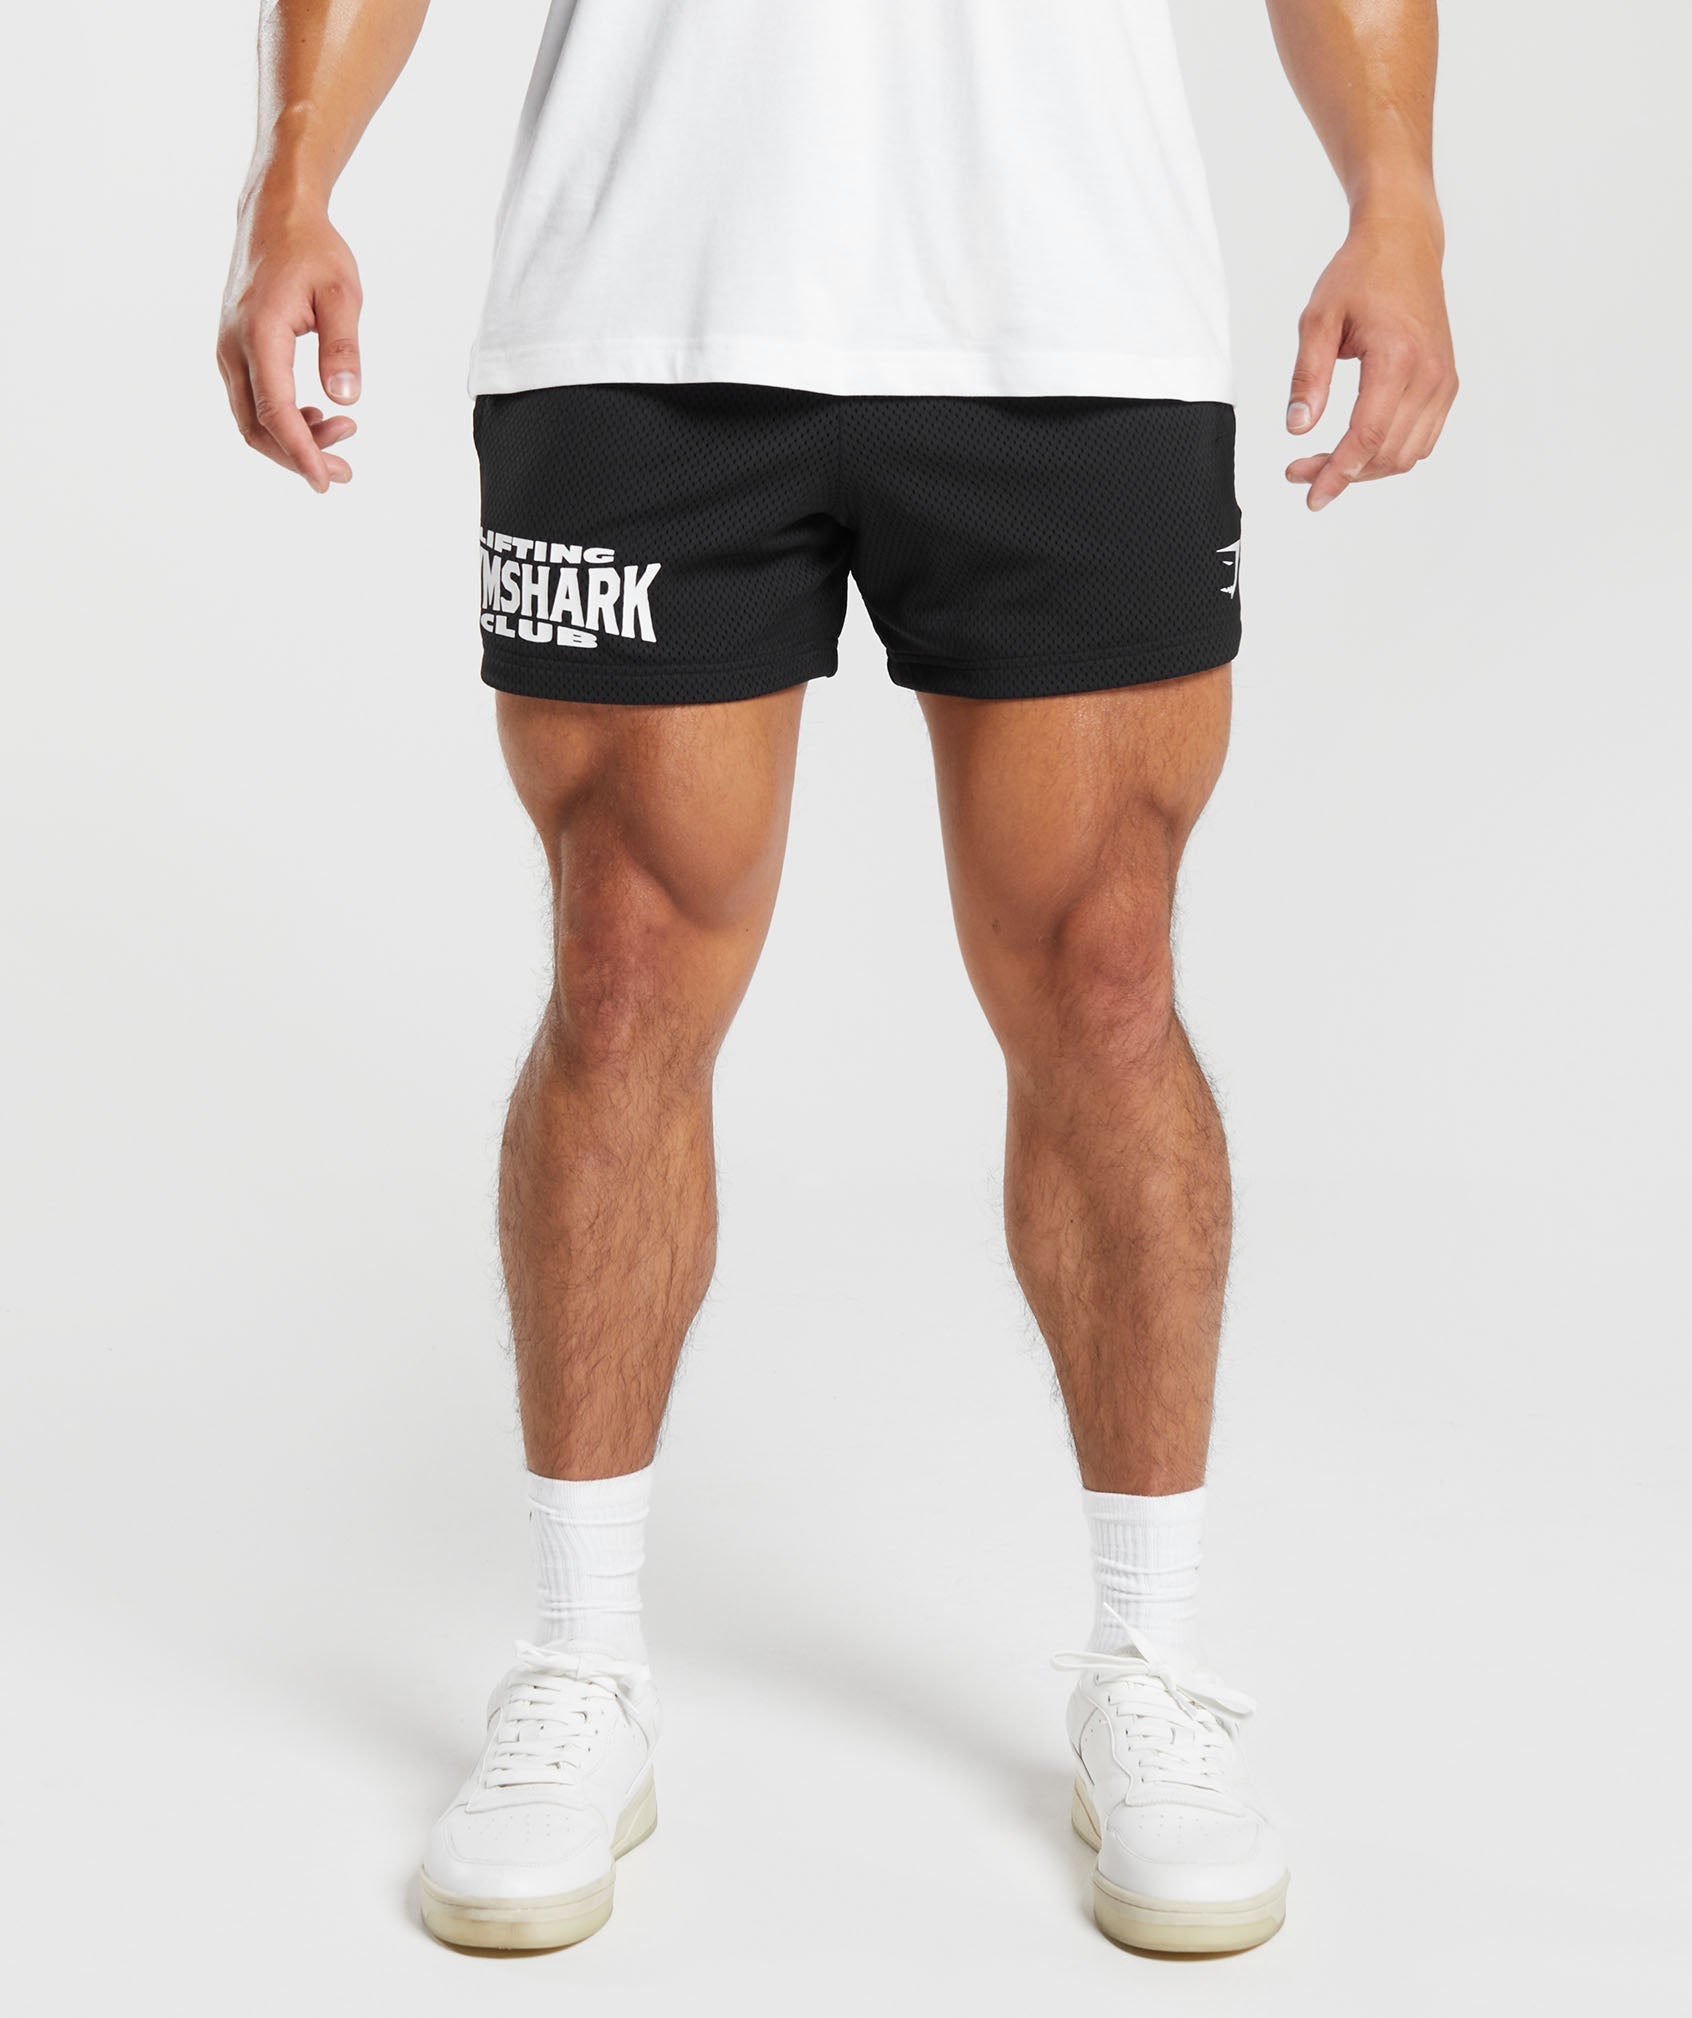 Men's 5 Inch Workout & Gym Shorts - Gymshark